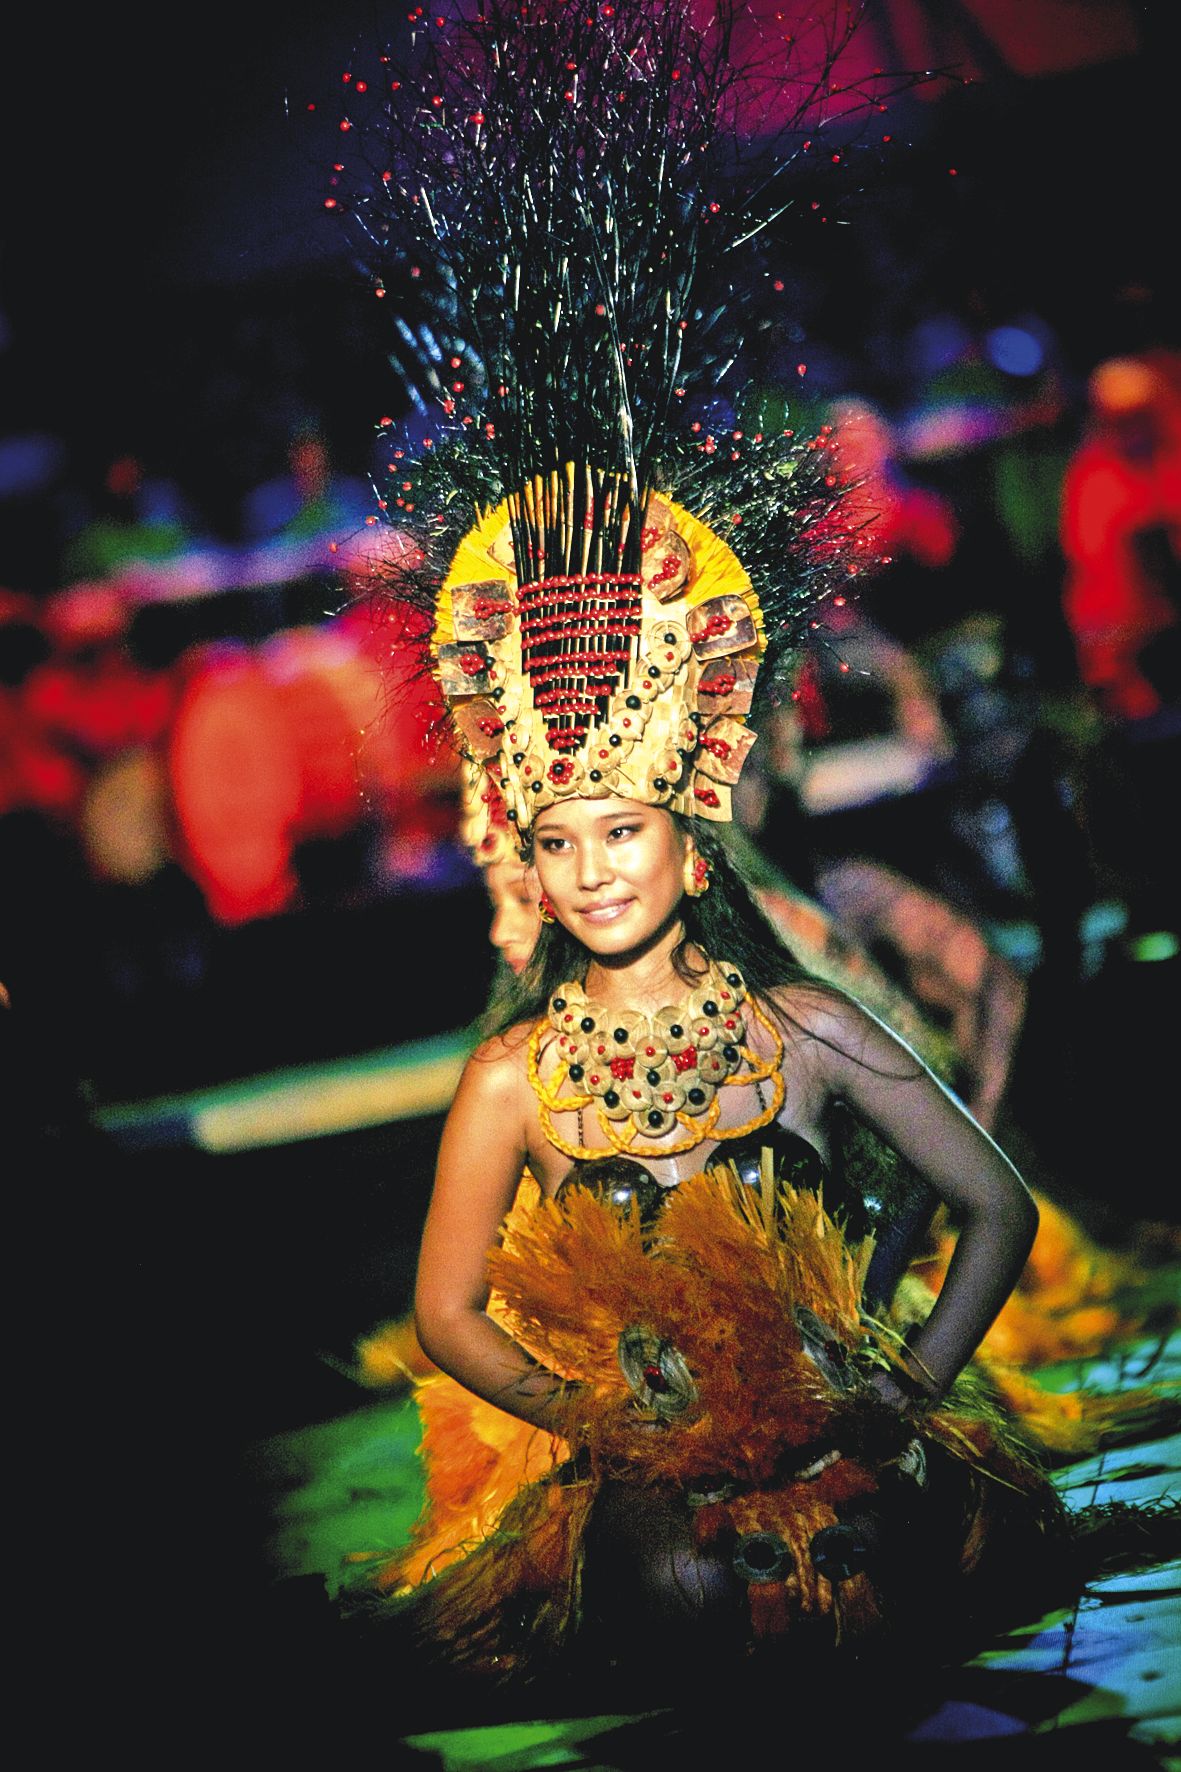 De gauche à droite, Tarati Temauriuri, de la troupe Hei Rurutu, une jeune danseuse du groupe Pupu Tuha'a Pae, de l'archipel des Australes, et la troupe O Tahiti E.